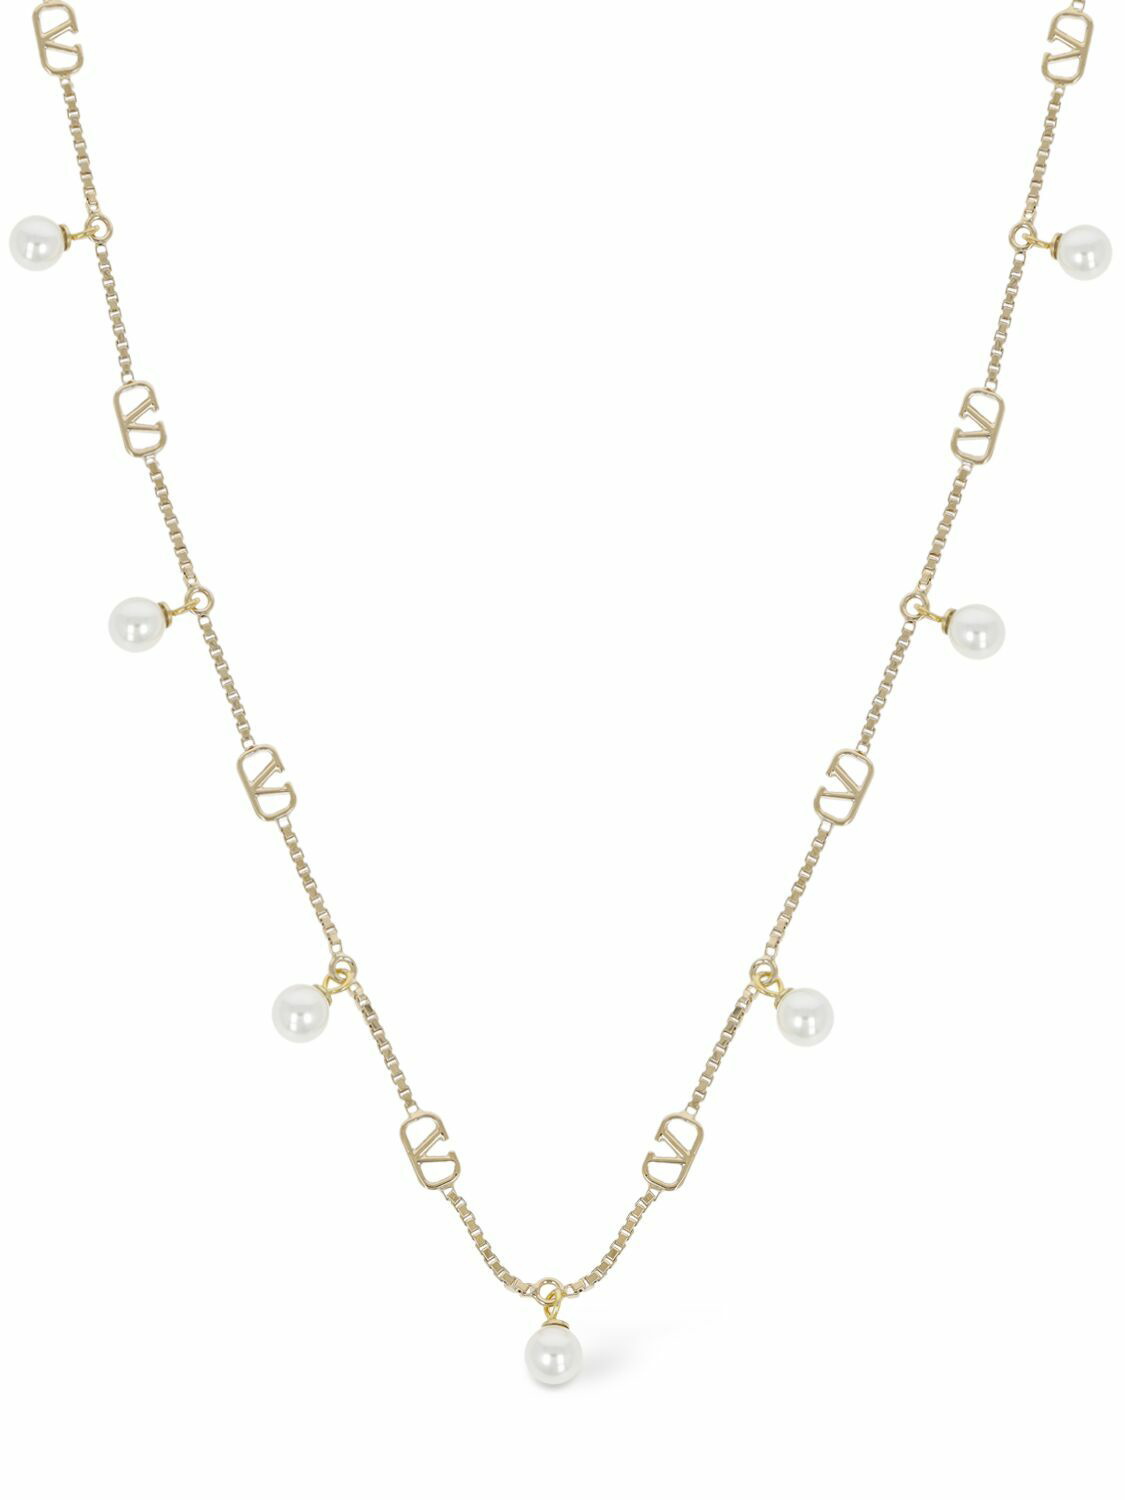 Natural Uncut Polki Diamond Layered Necklace Valentino Chain Double Strand  Chain | eBay